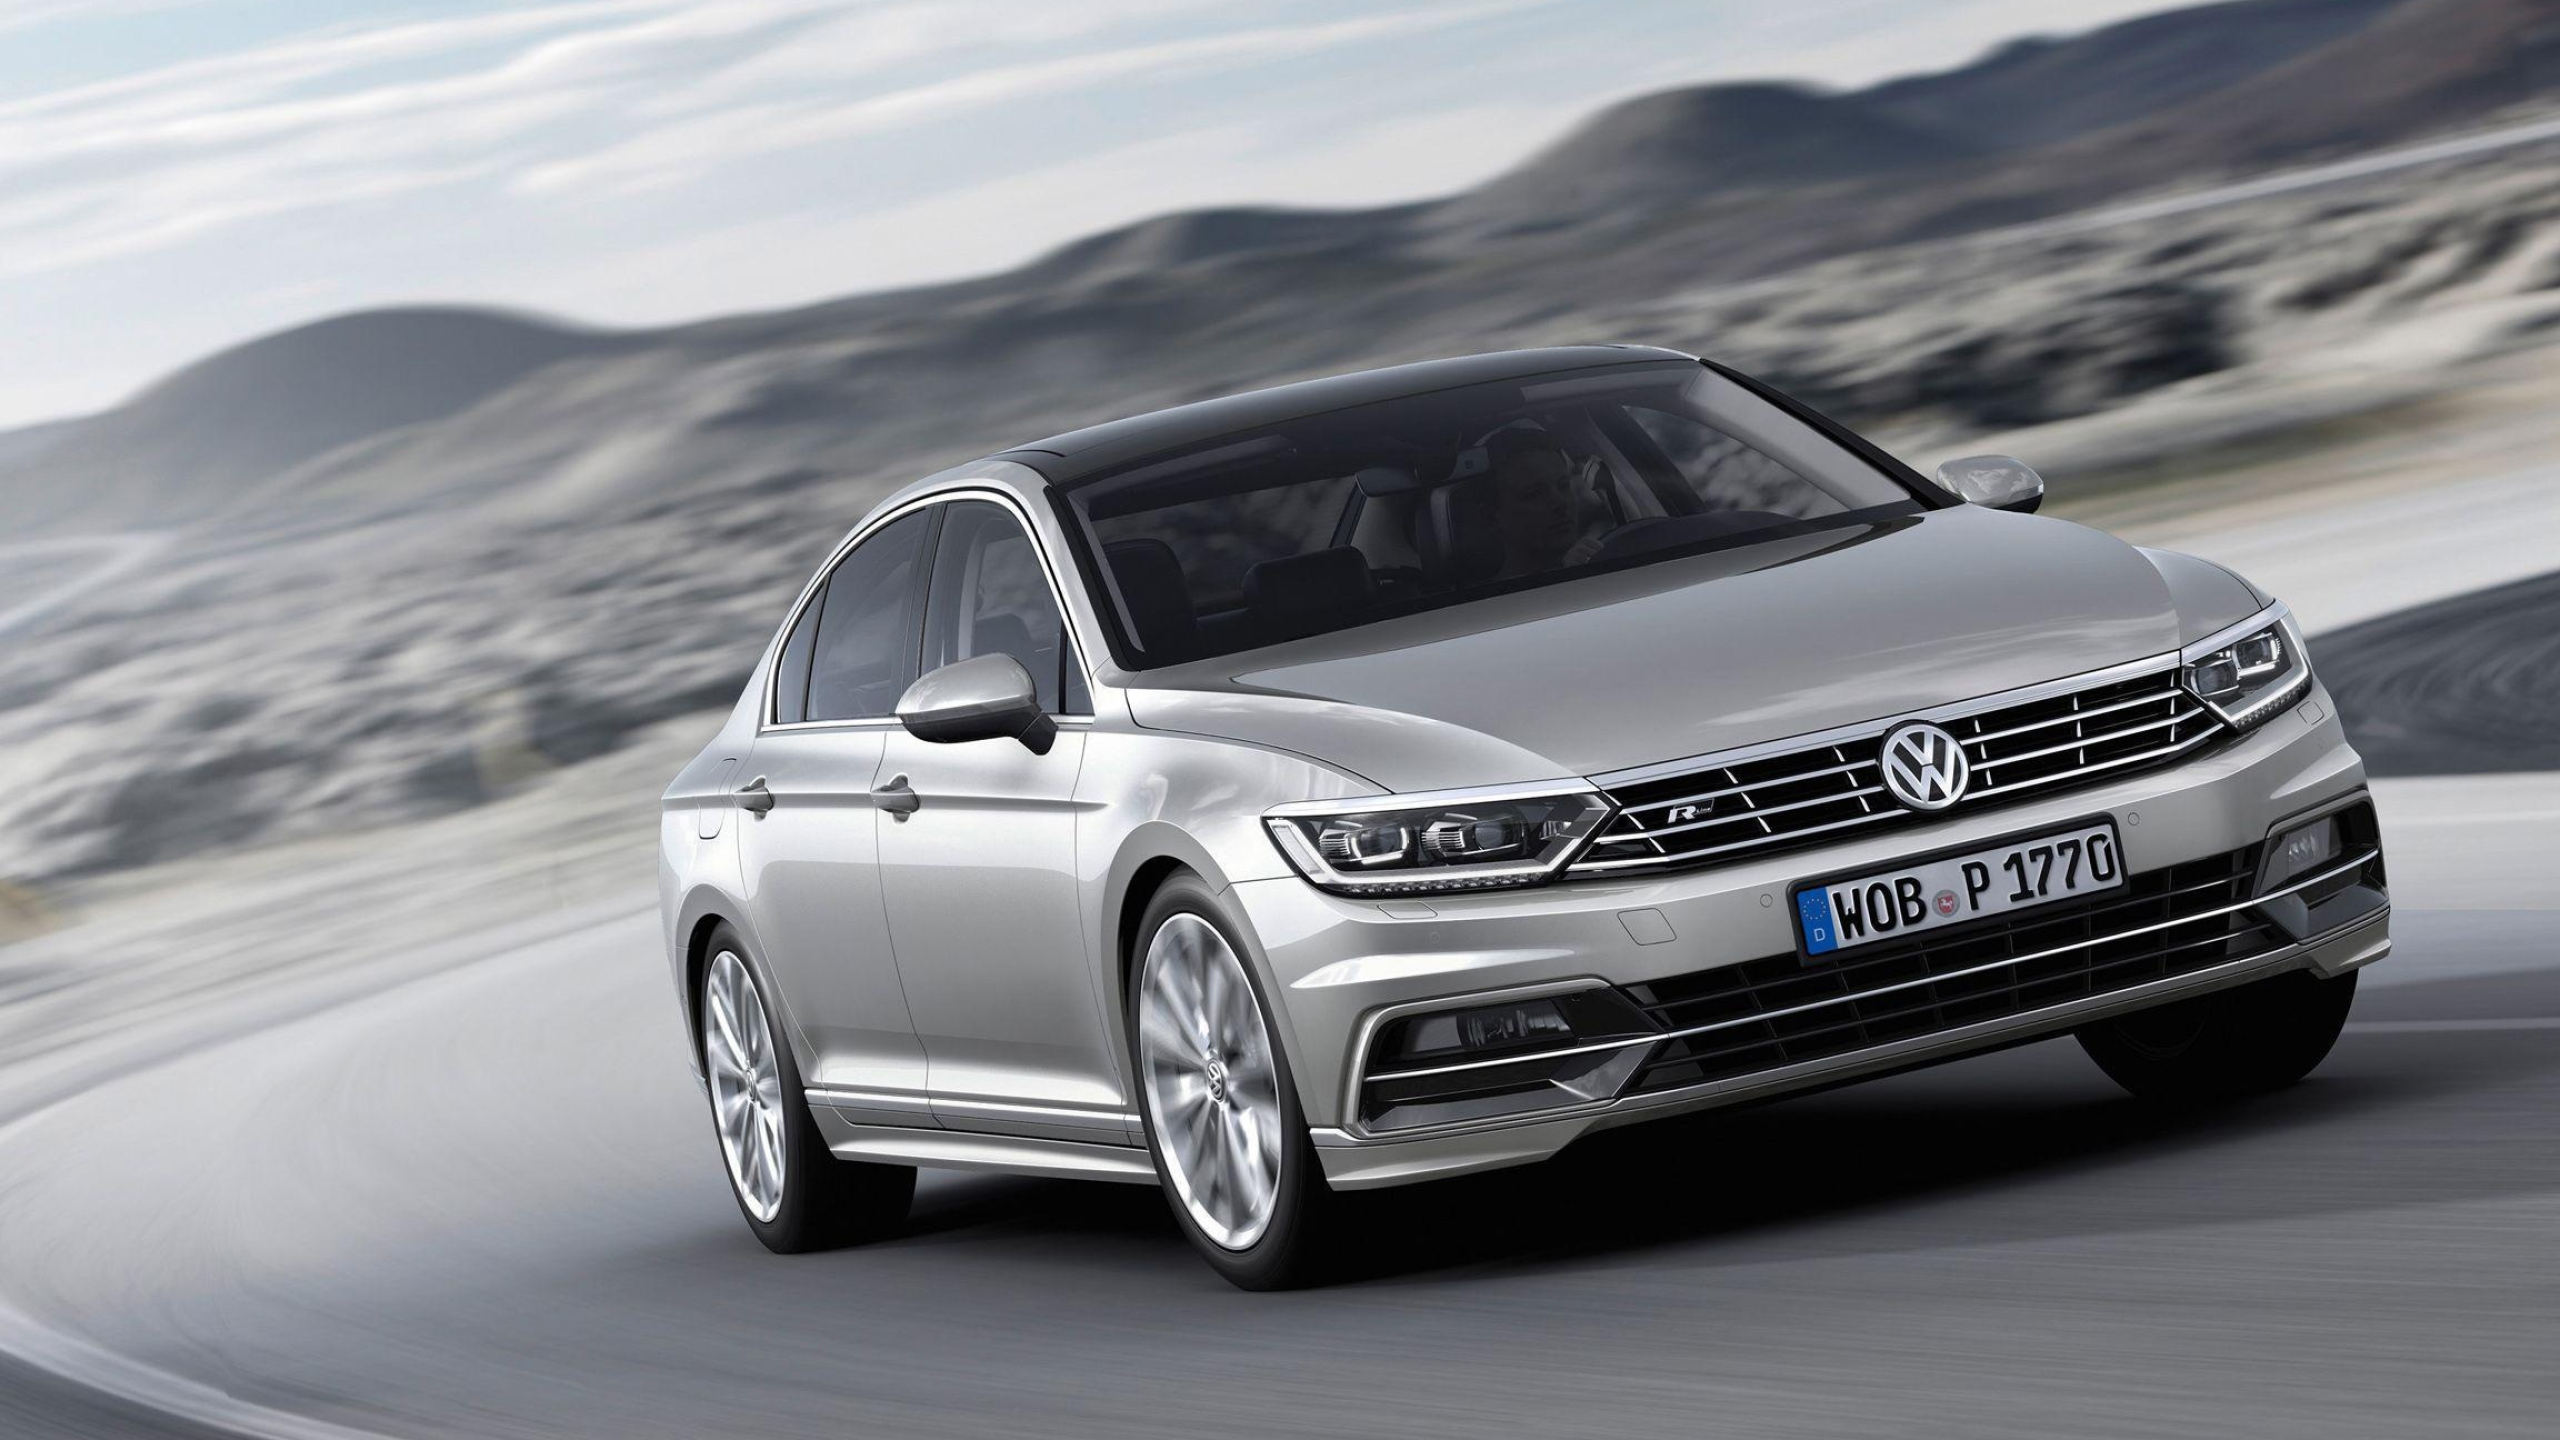 Volkswagen Passat, Top free wallpapers, Automotive sophistication, Style on wheels, 2560x1440 HD Desktop